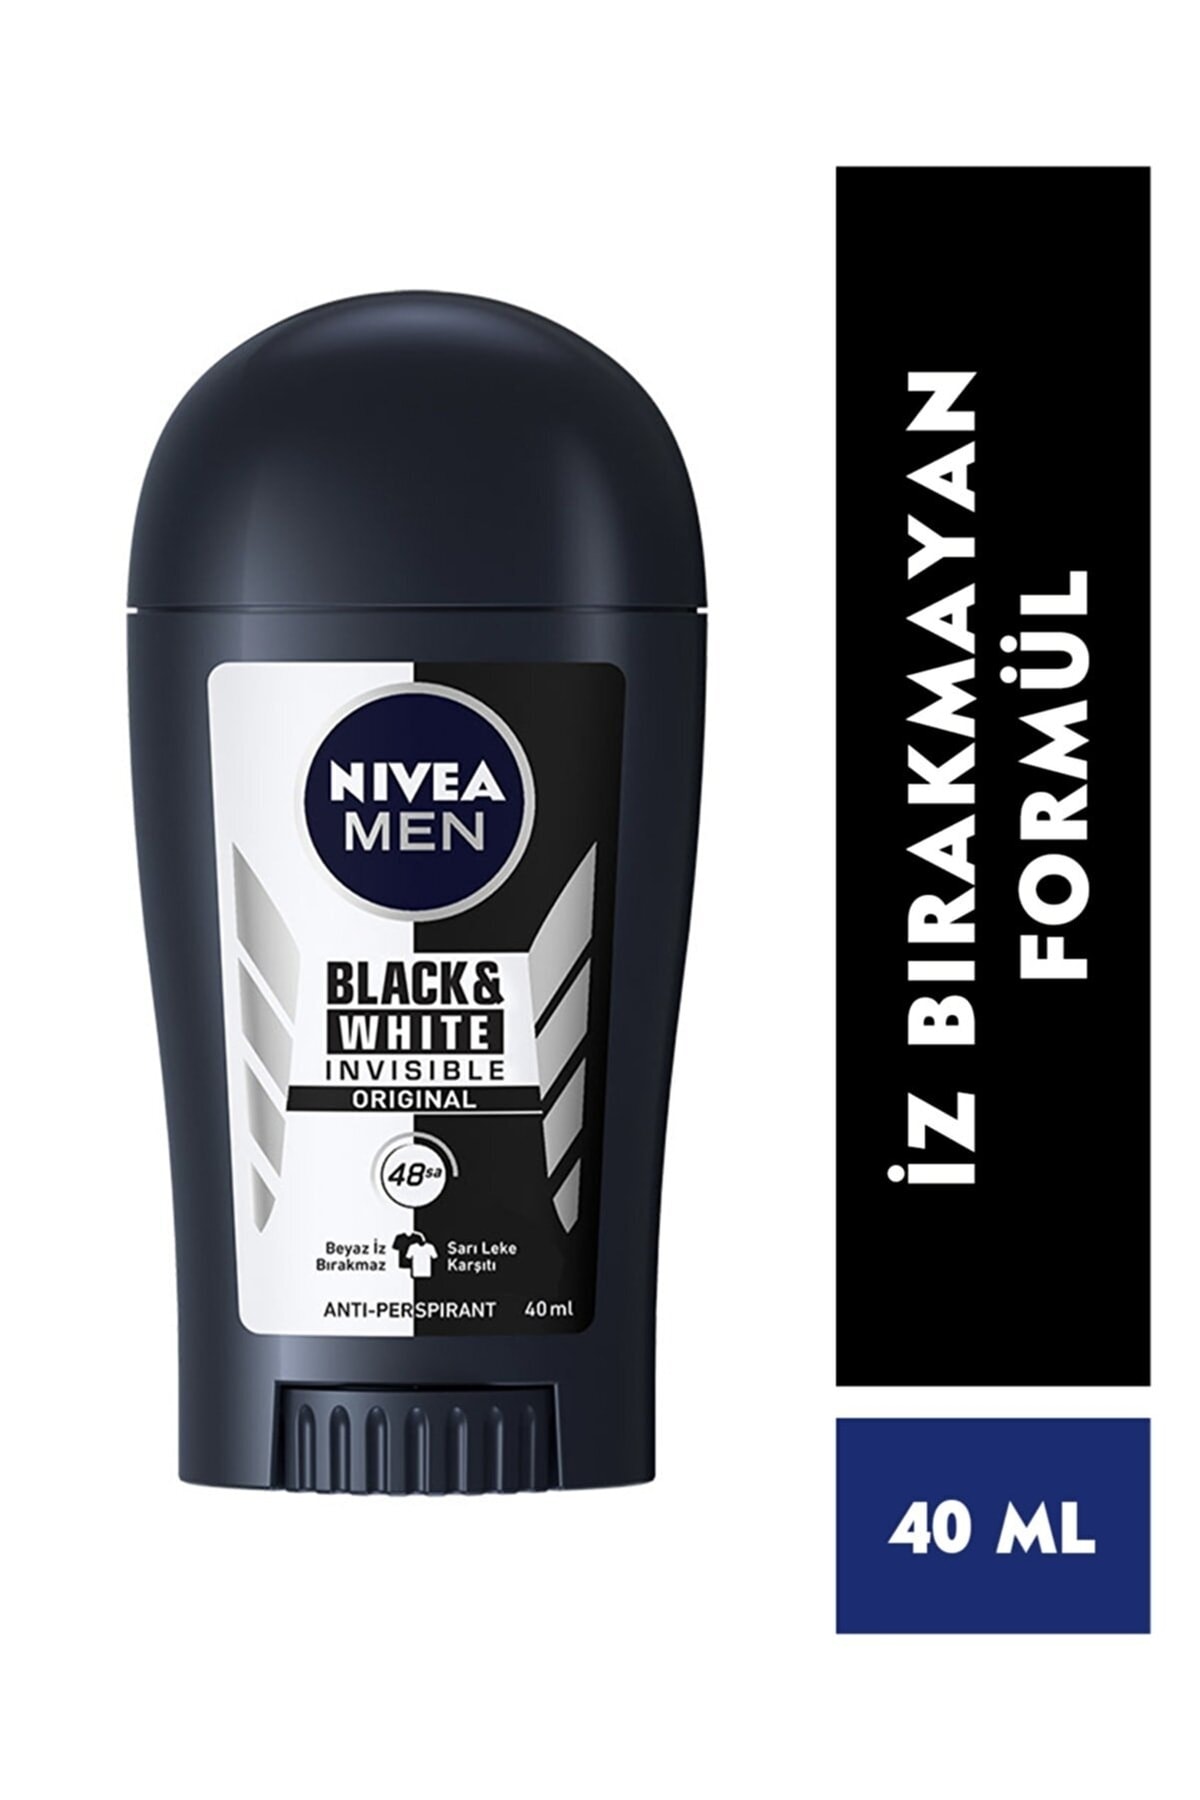 Nivea Deodorant Black & White Invisible , Ter Ve Ter Kokusuna Karşı 48 Saat Anti-perspirant Koruma